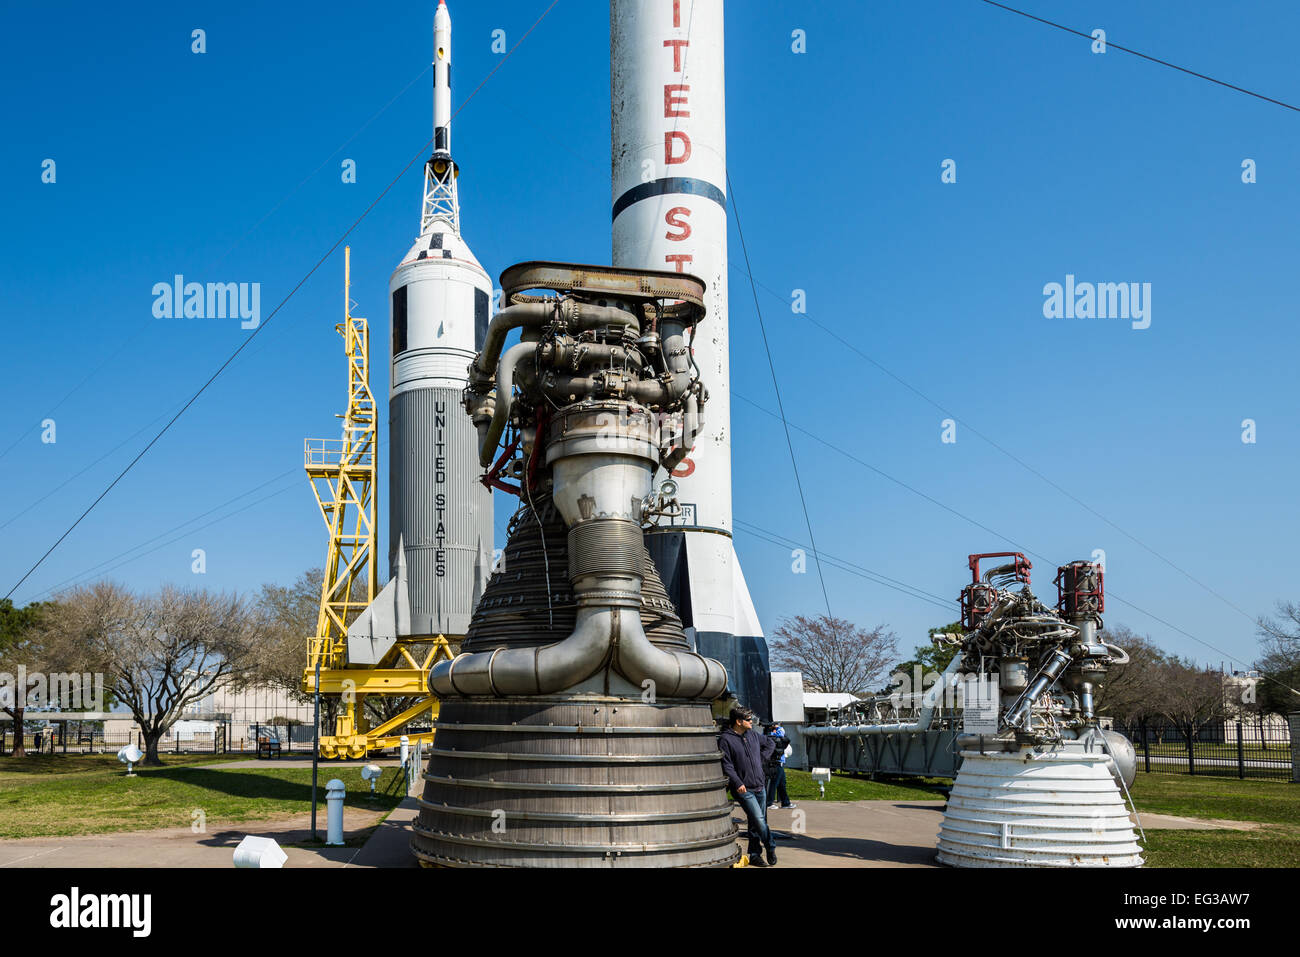 Rocket engines in display at the Rocket Park, NASA Johnson Space Center, Houston, Texas, USA. Stock Photo